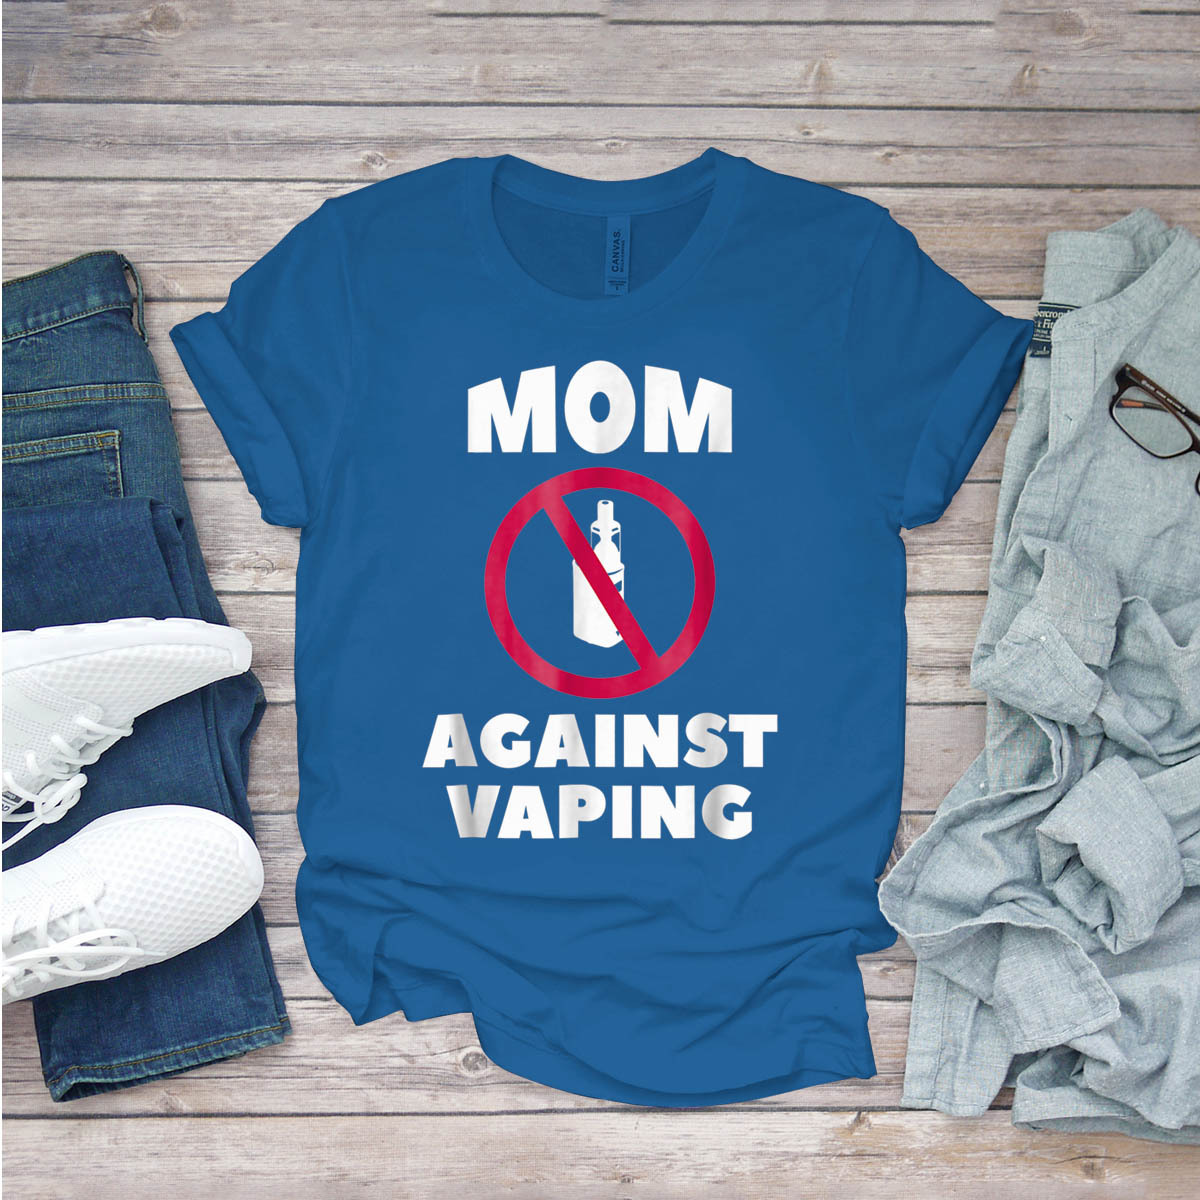 Mom Against Vaping Anti Vaping T-Shirt Birthday Funny Ideas Gift ...